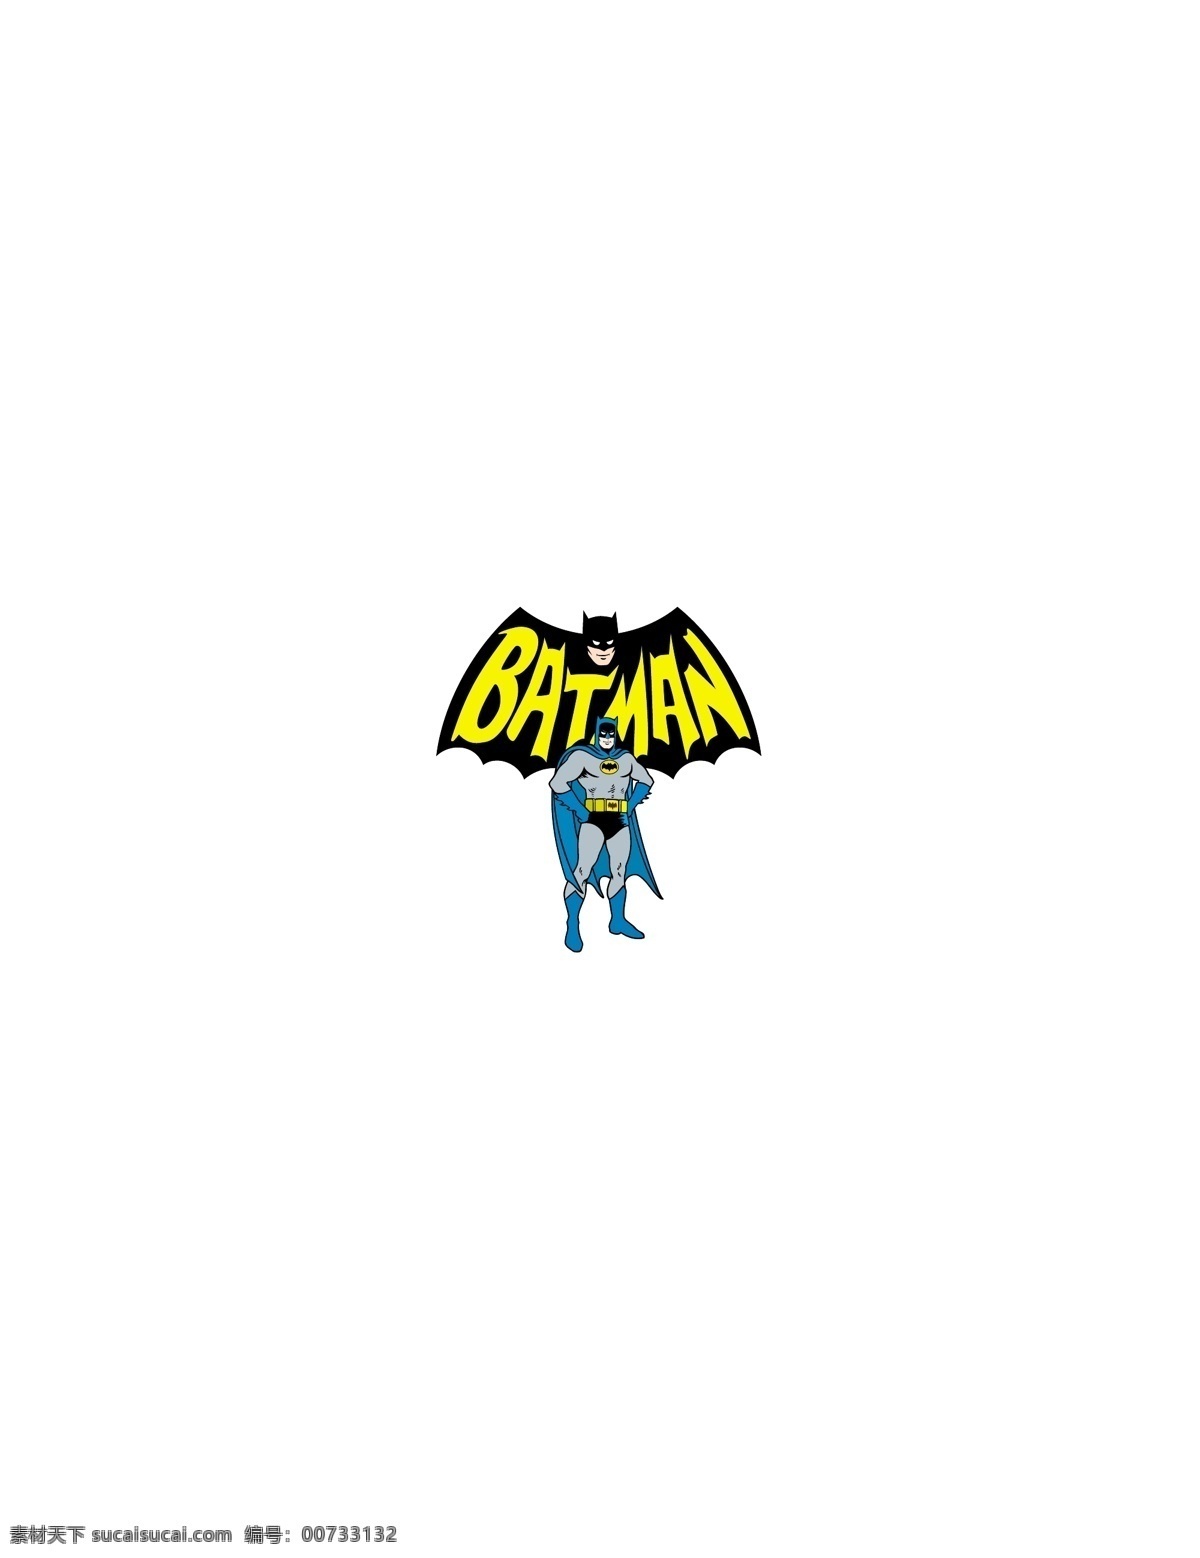 batman logo 设计欣赏 标志设计 欣赏 矢量下载 网页矢量 商业矢量 logo大全 红色